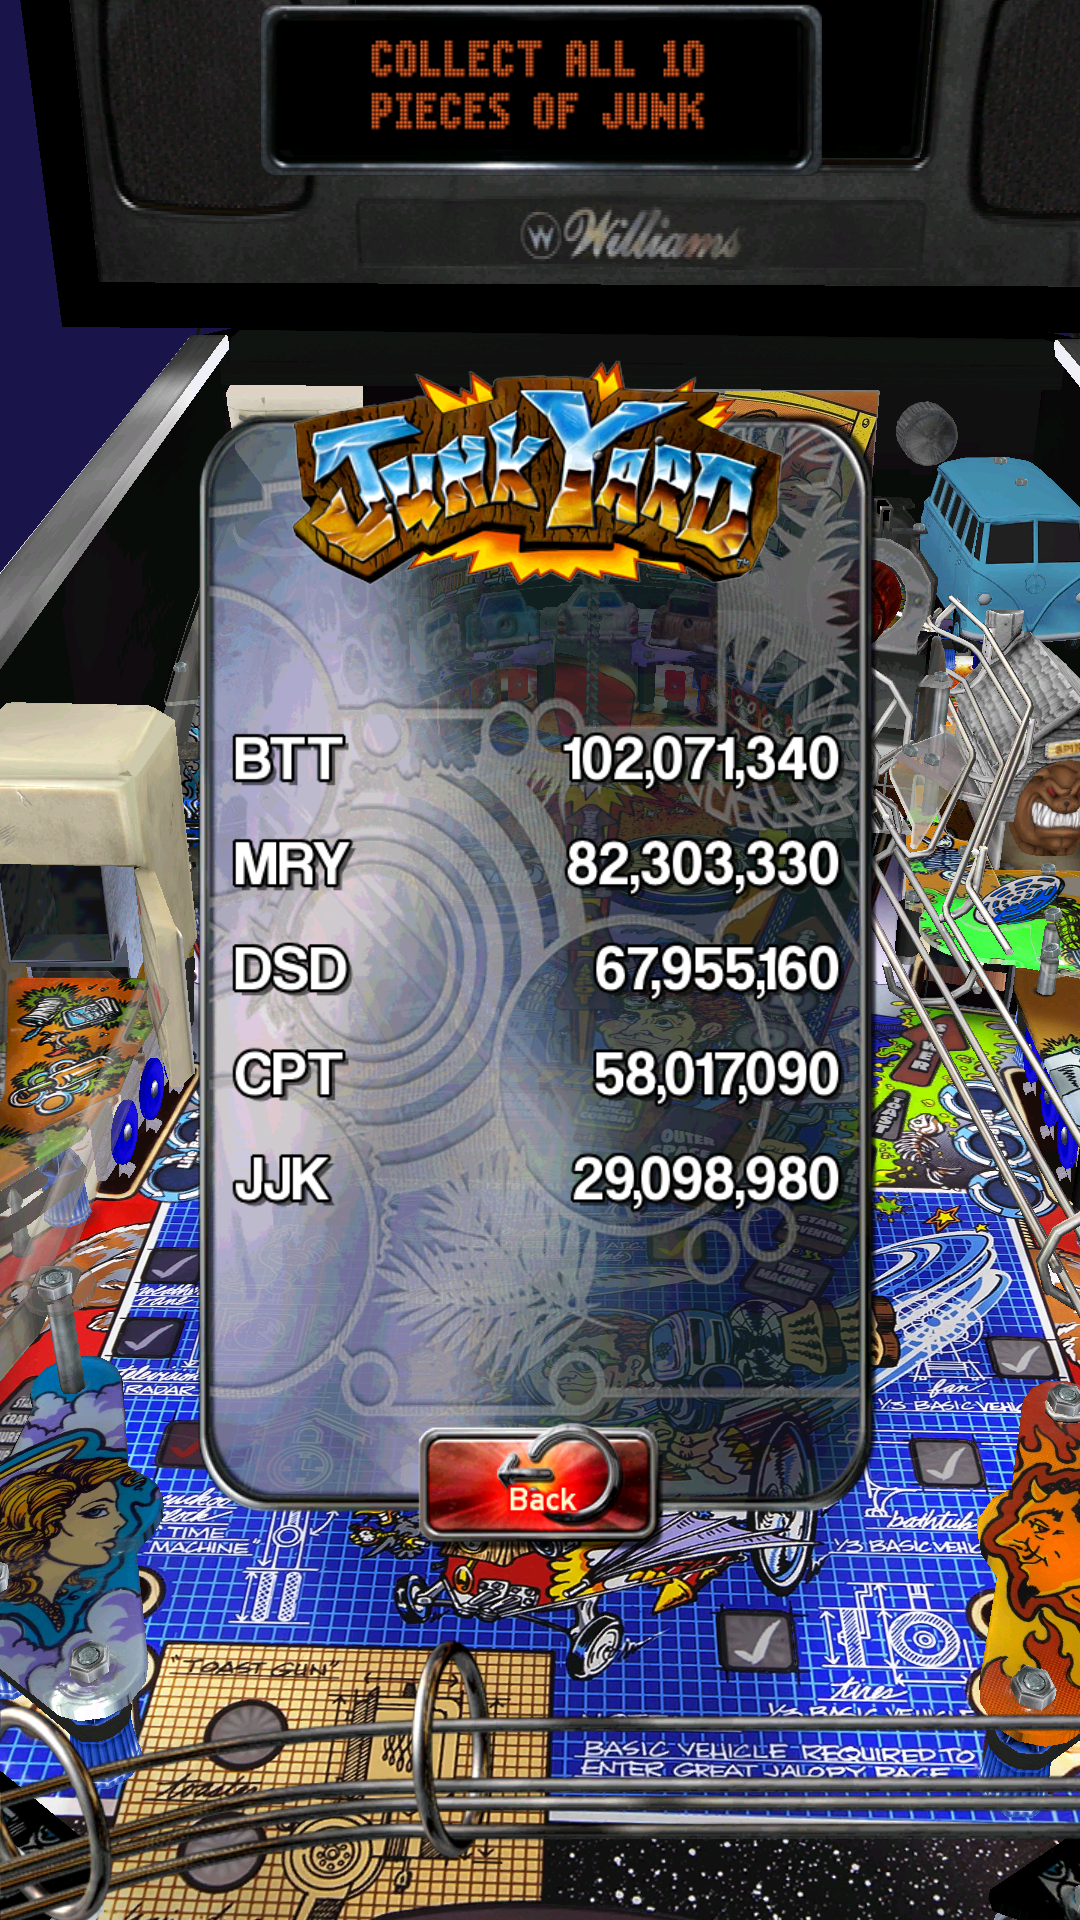 Pinball Arcade: Junk Yard 67,955,160 points